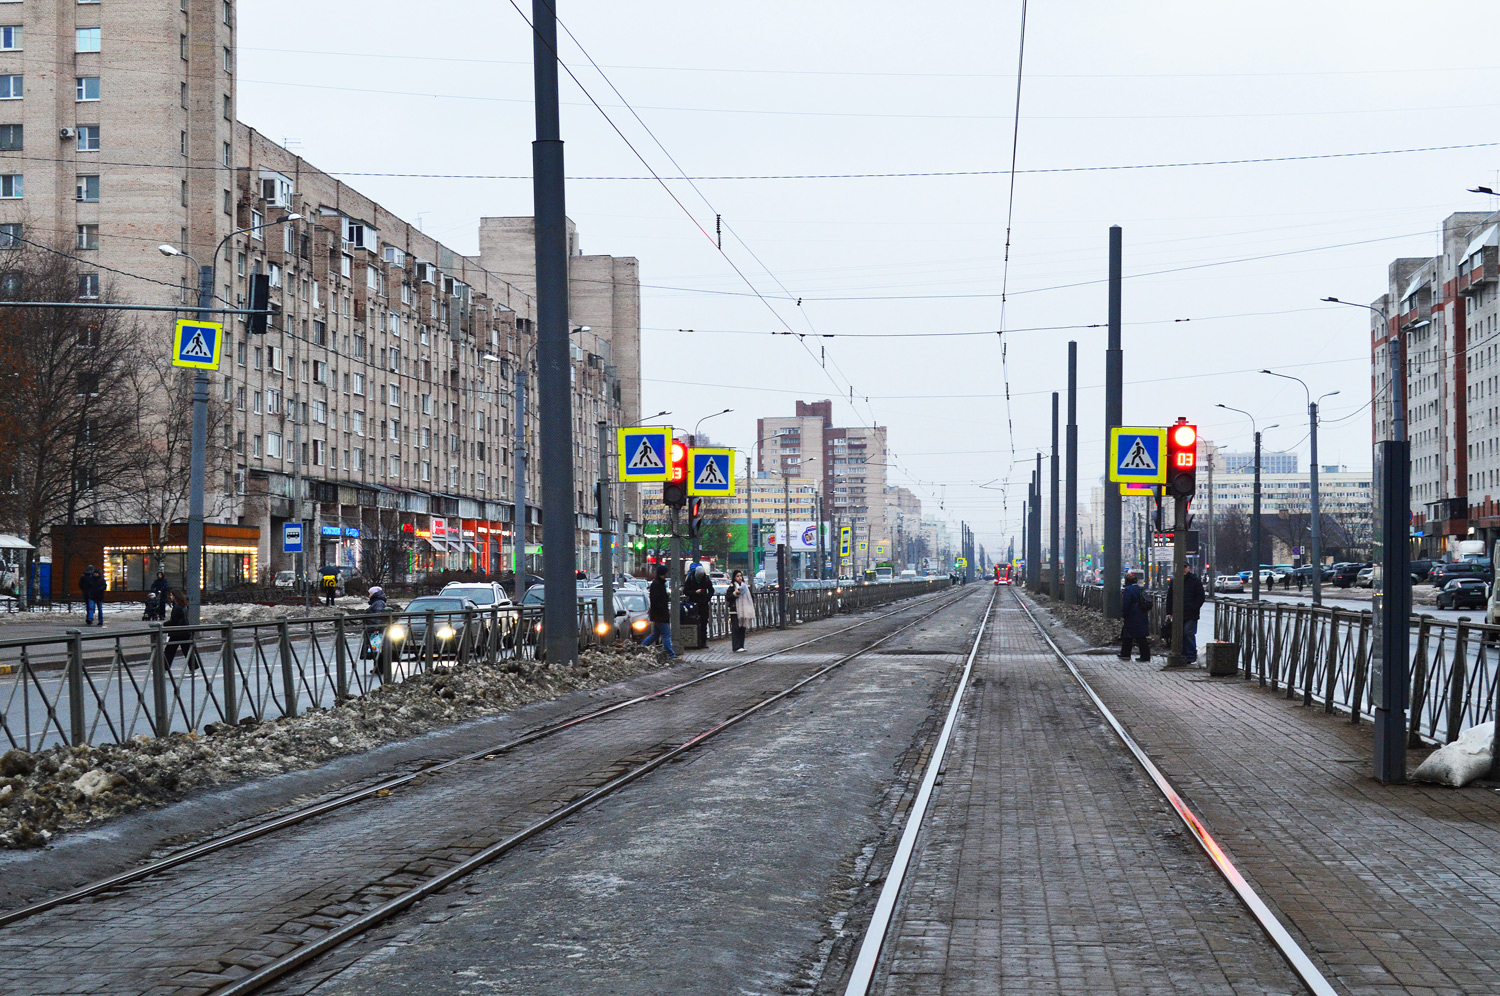 Saint-Pétersbourg — Tram lines and infrastructure